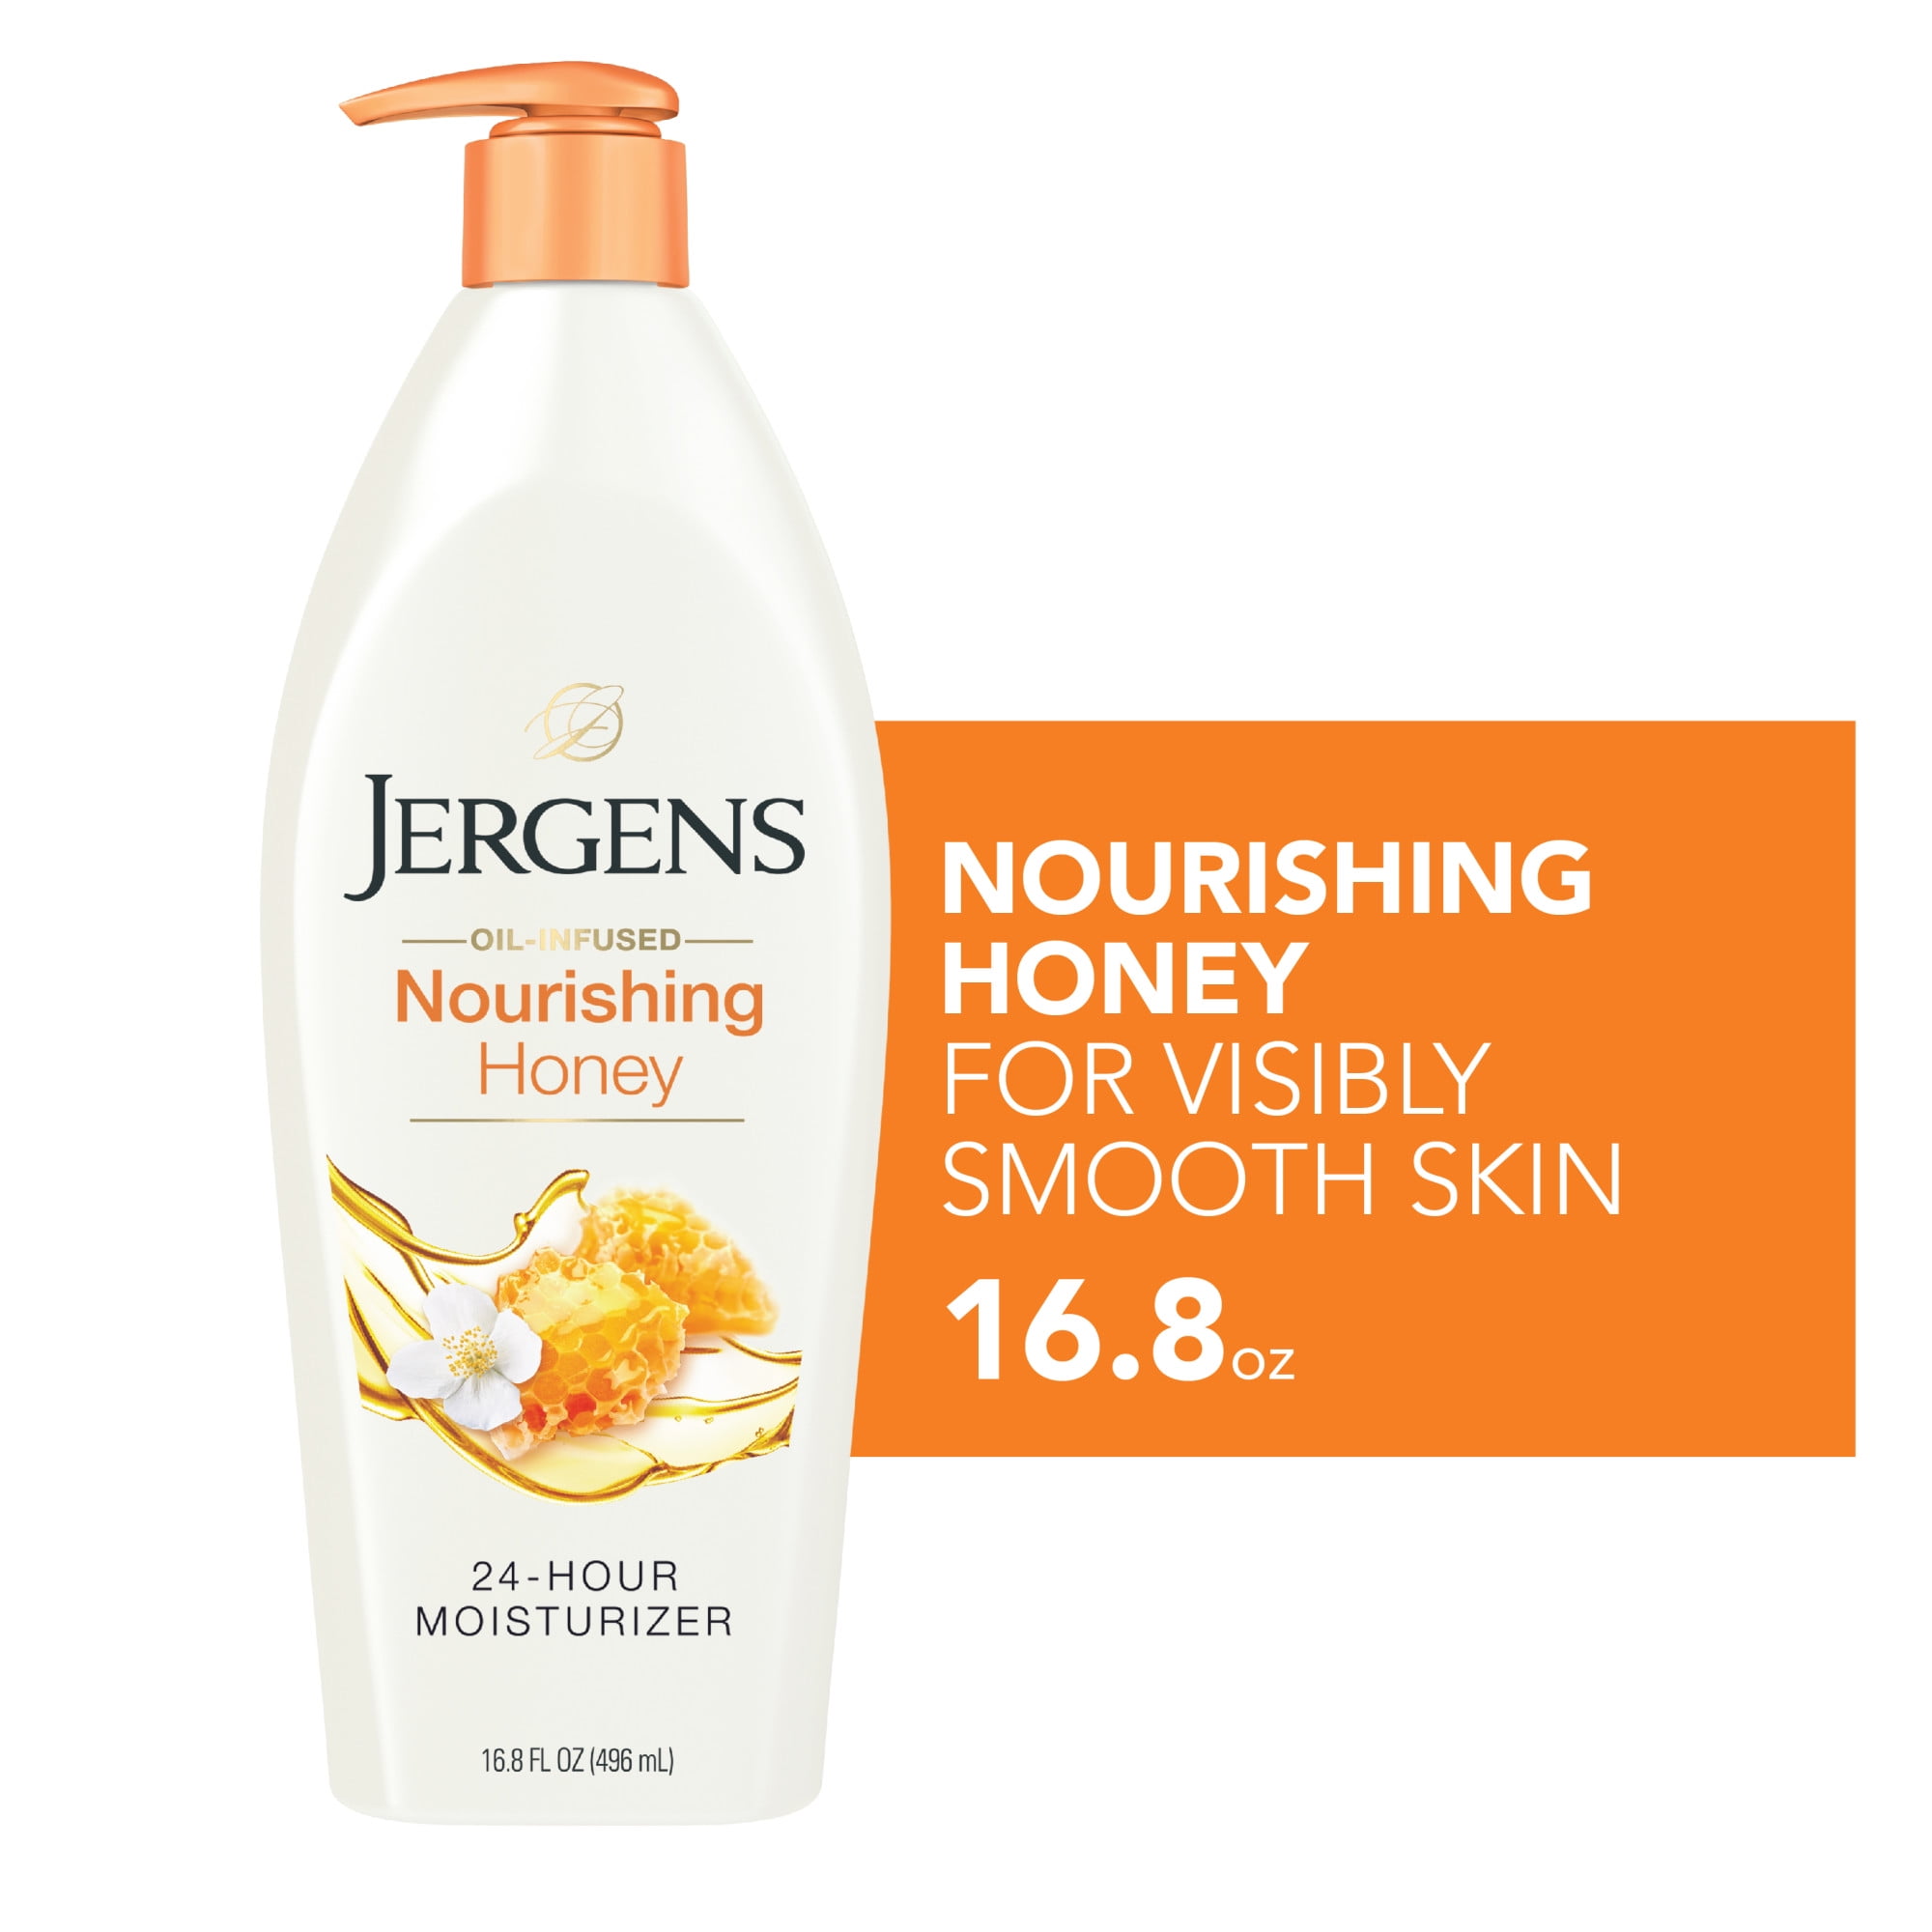 Jergens Hand and Body Lotion, Nourishing Honey Dry Skin Body Lotion, 16.8 Oz